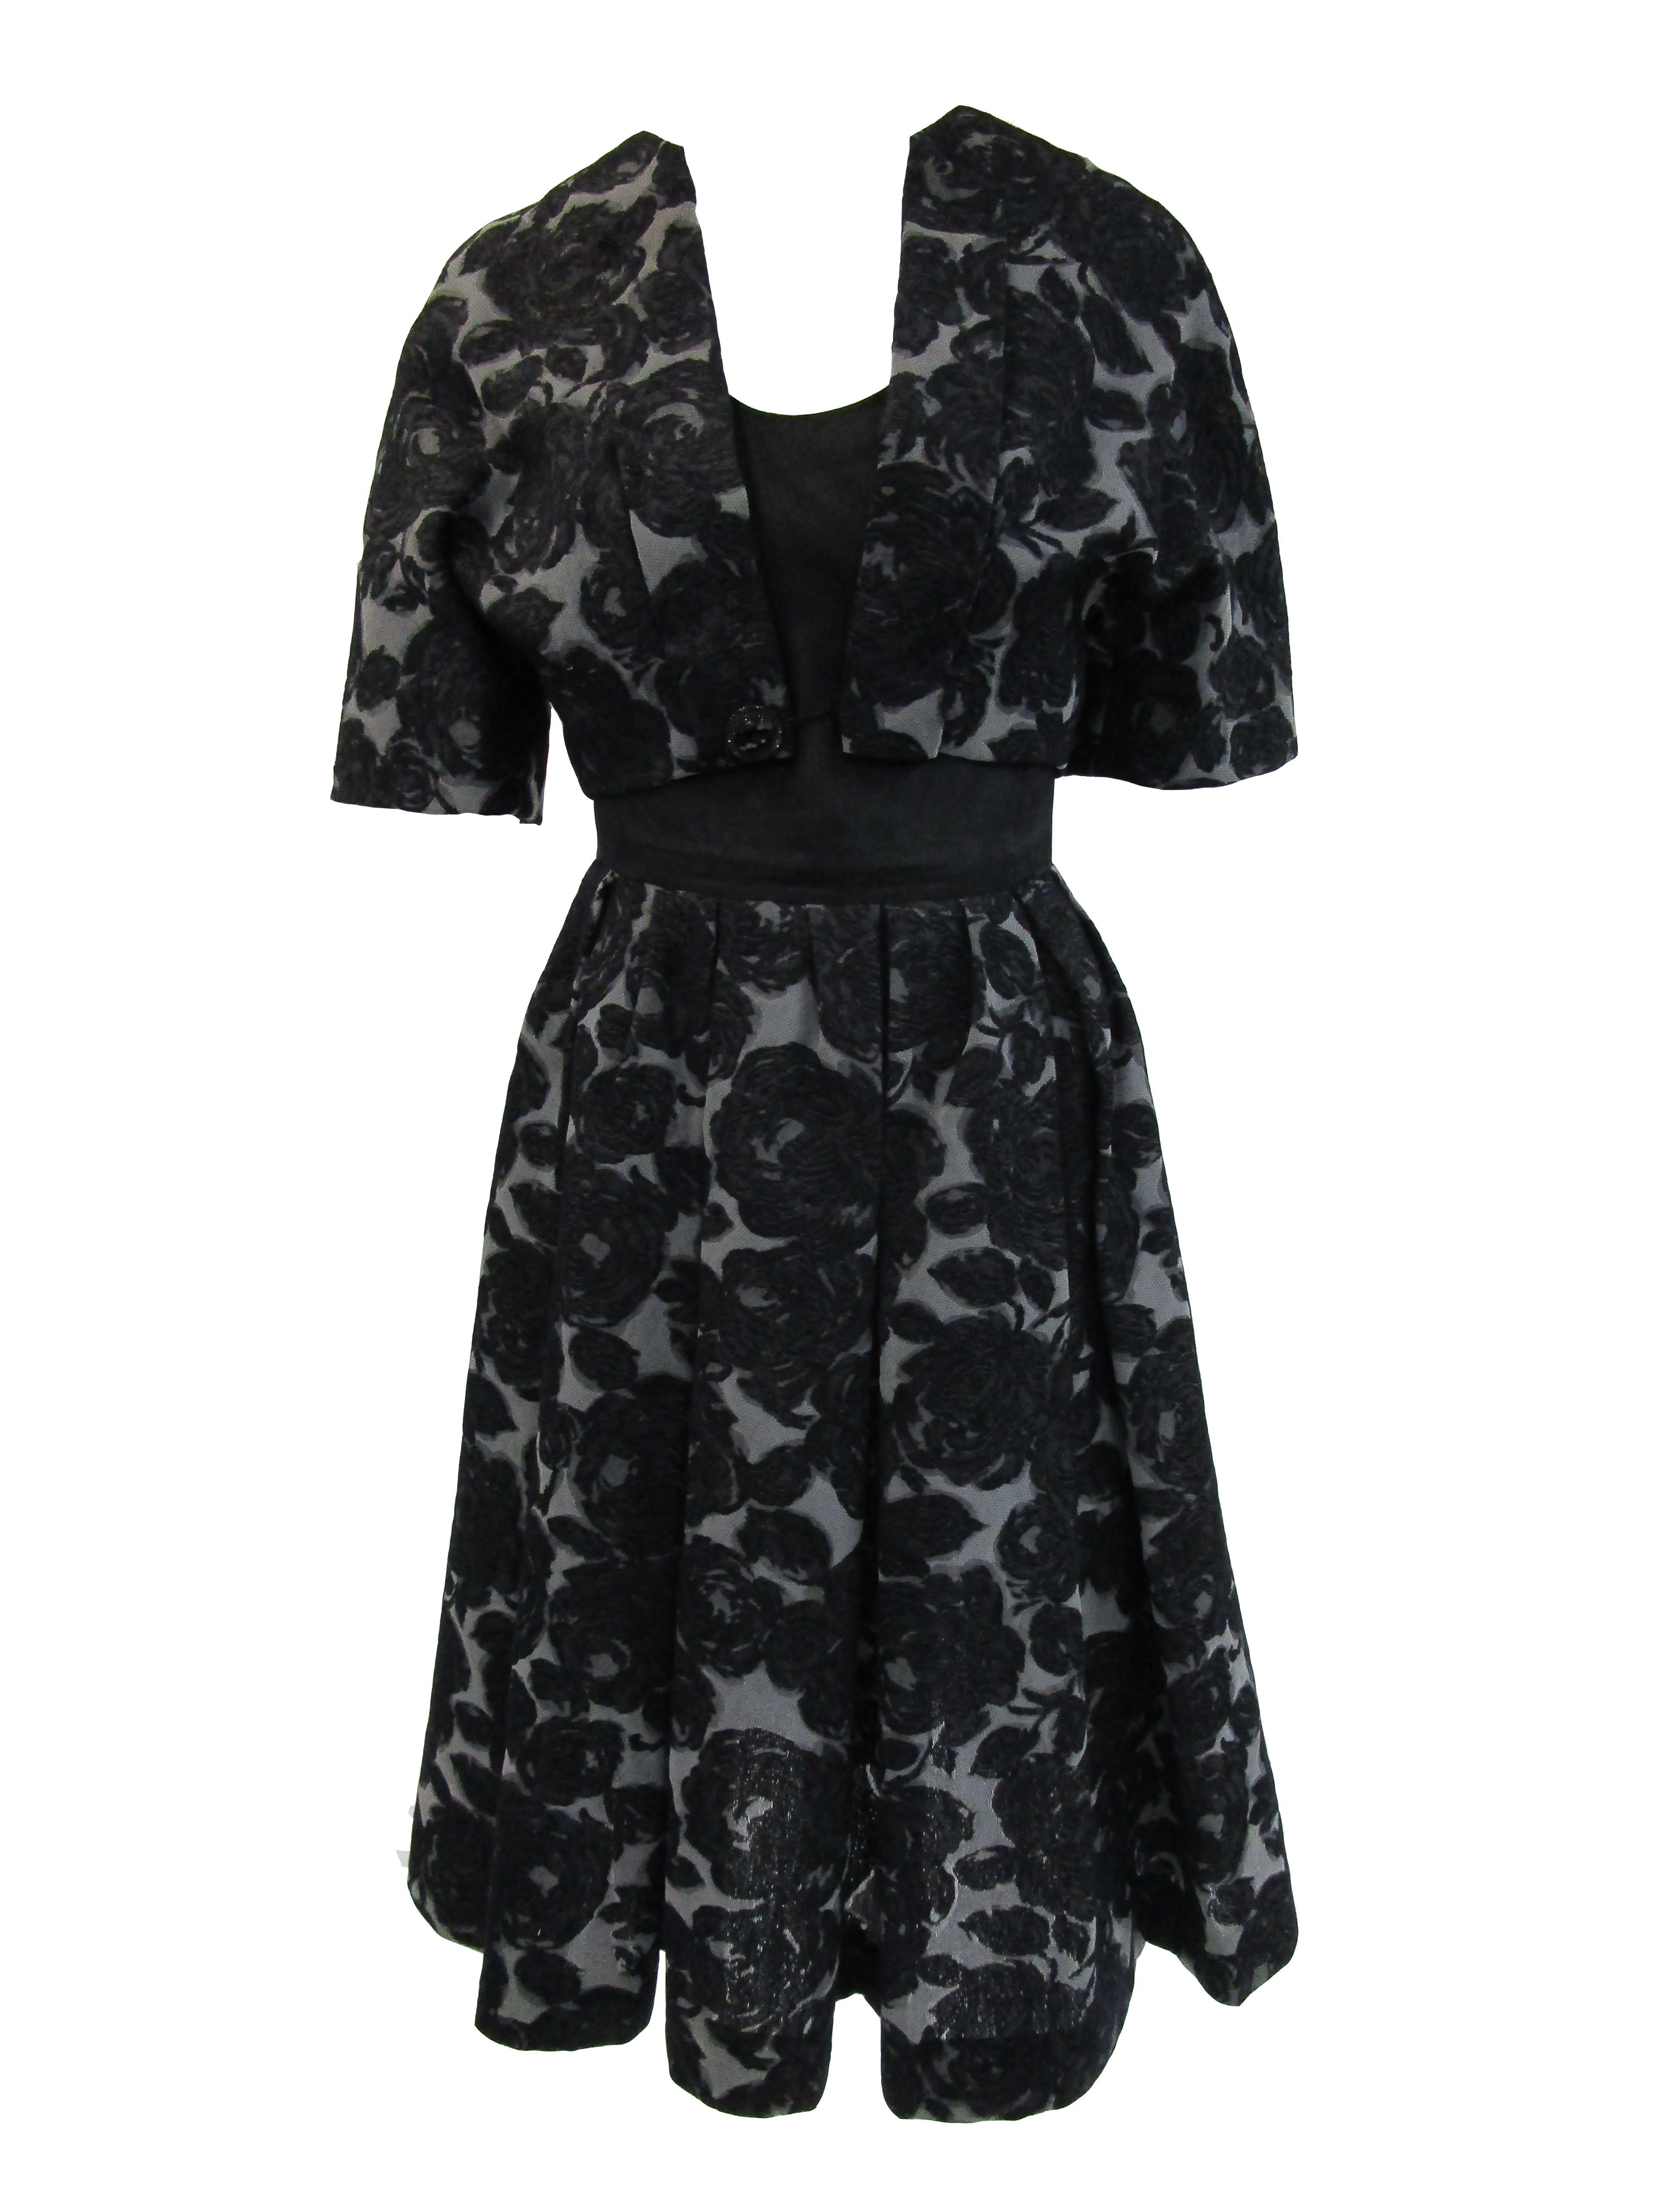 Rare 1950s Madame Gres licensed Black & Grey Embroidered Dress w/ Bolero Jacket For Sale 3